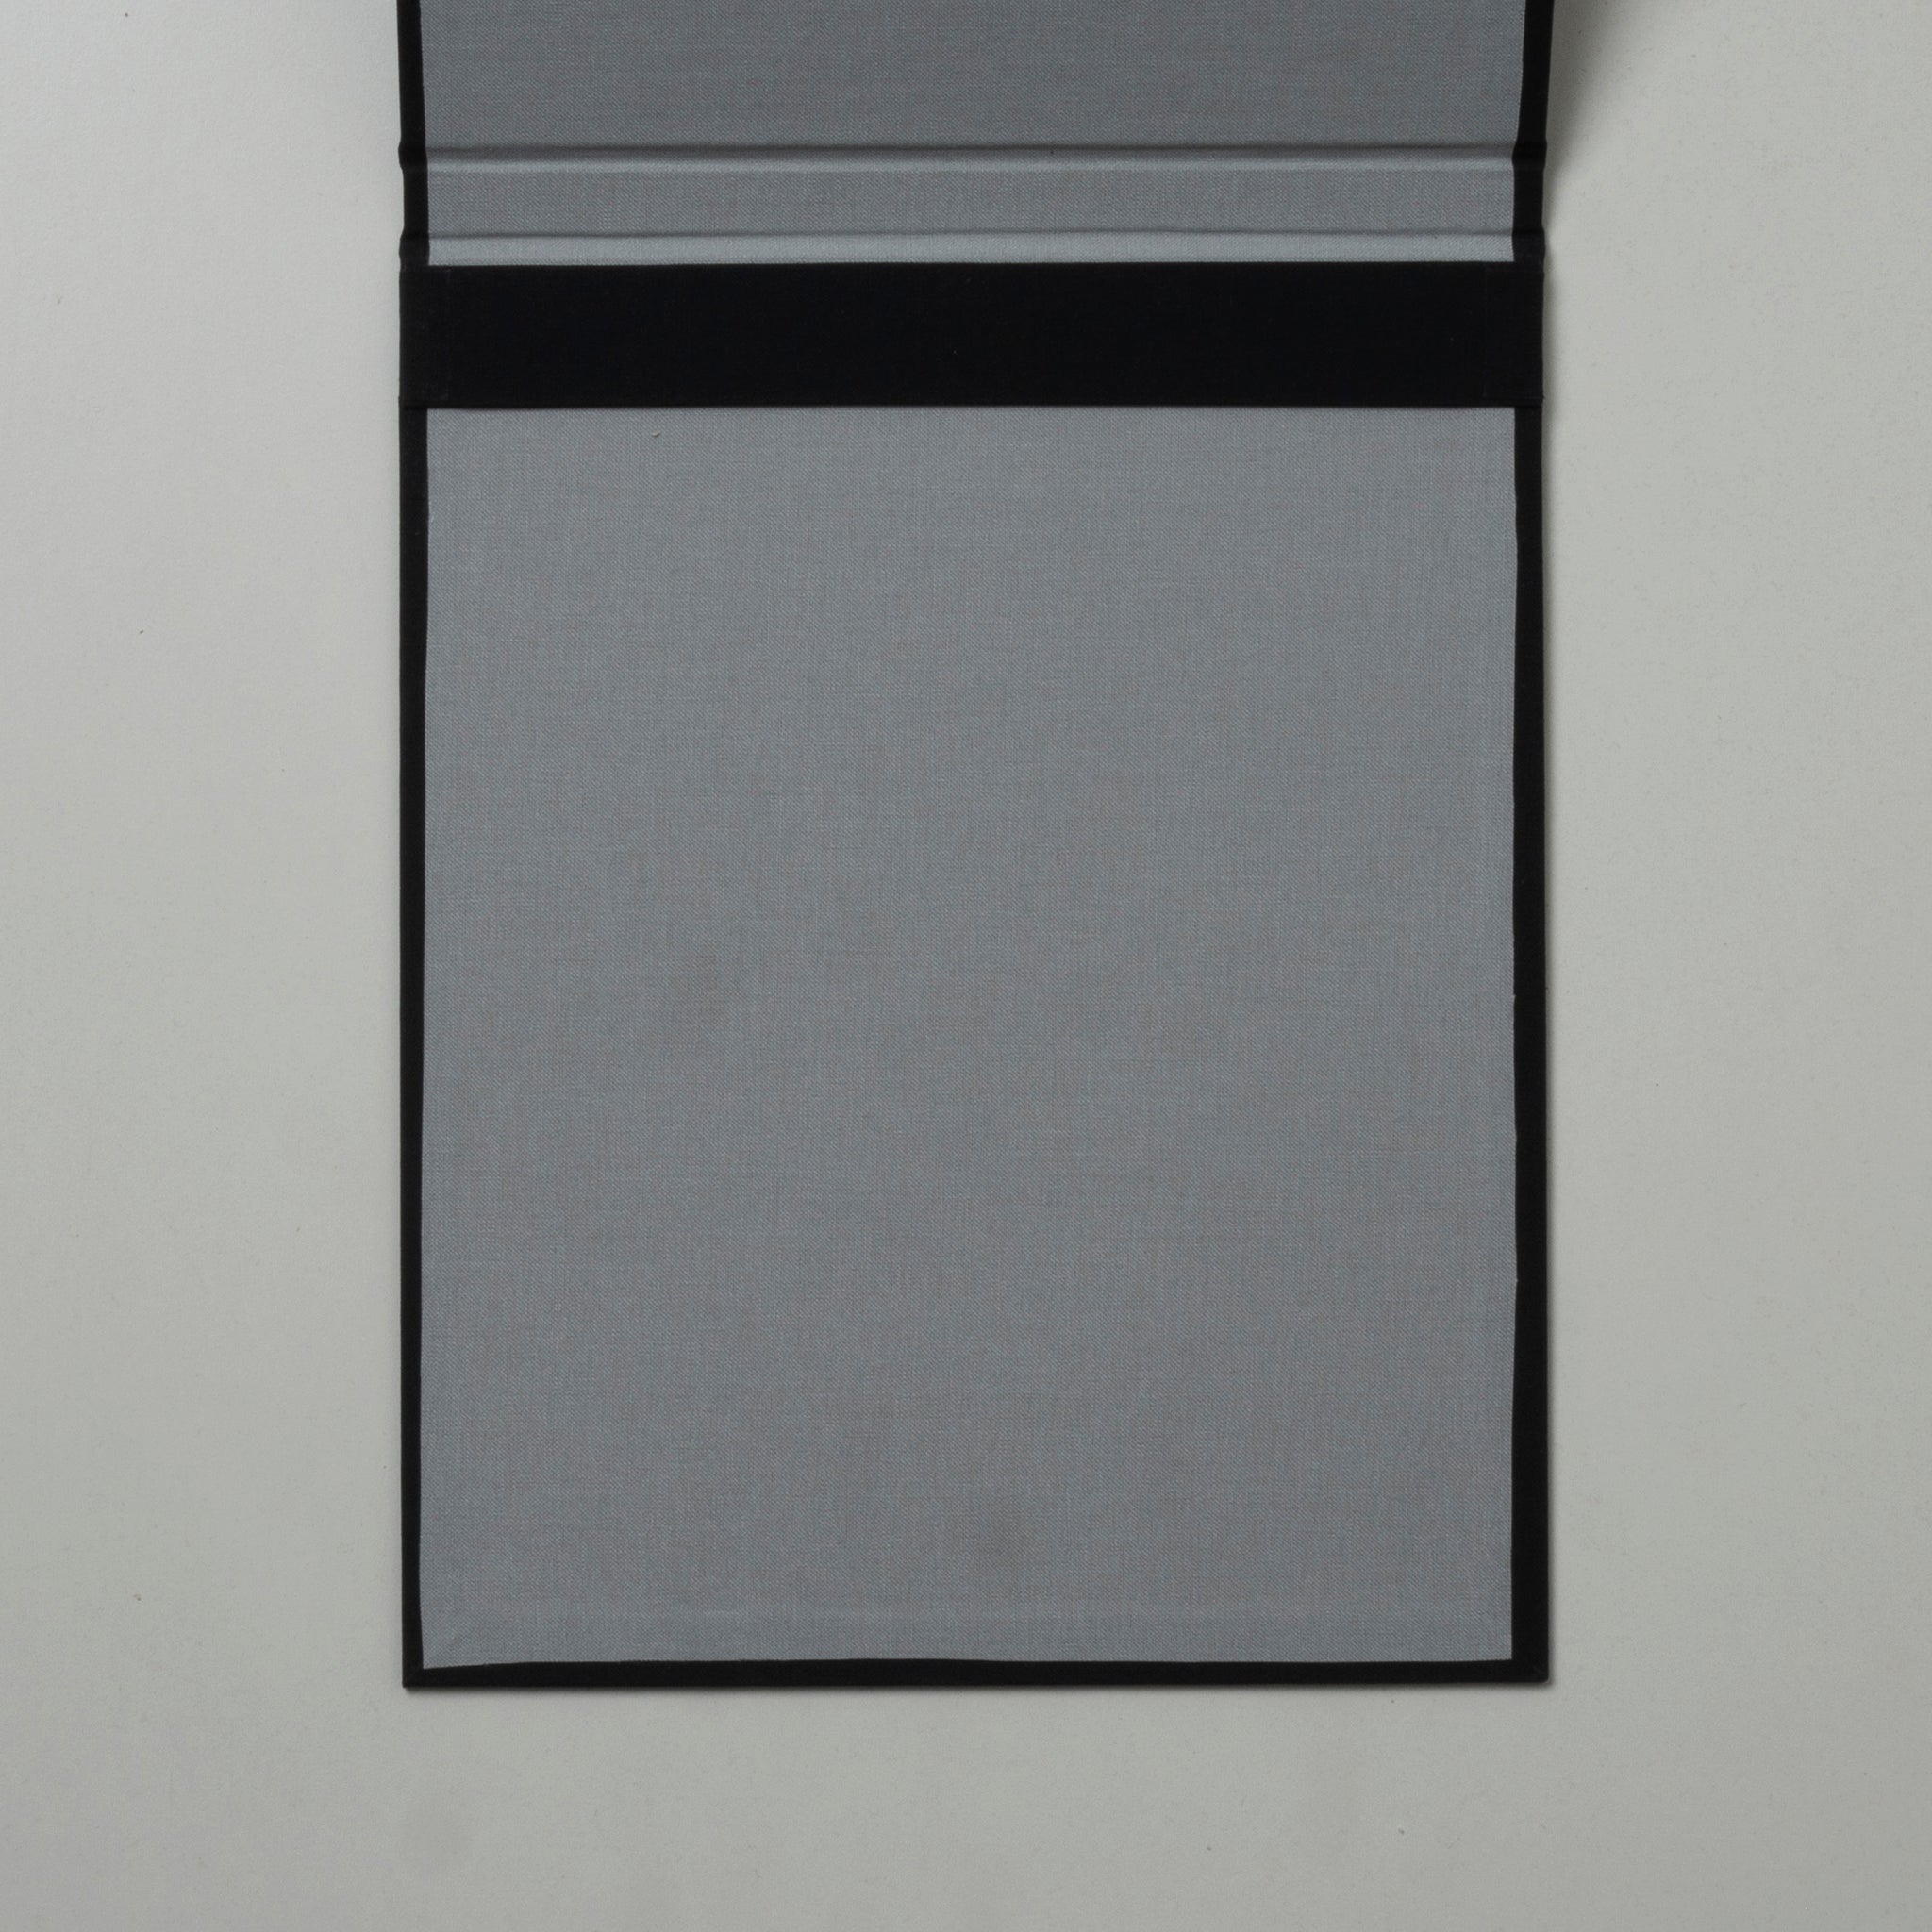 Portablock vertical - tela negra